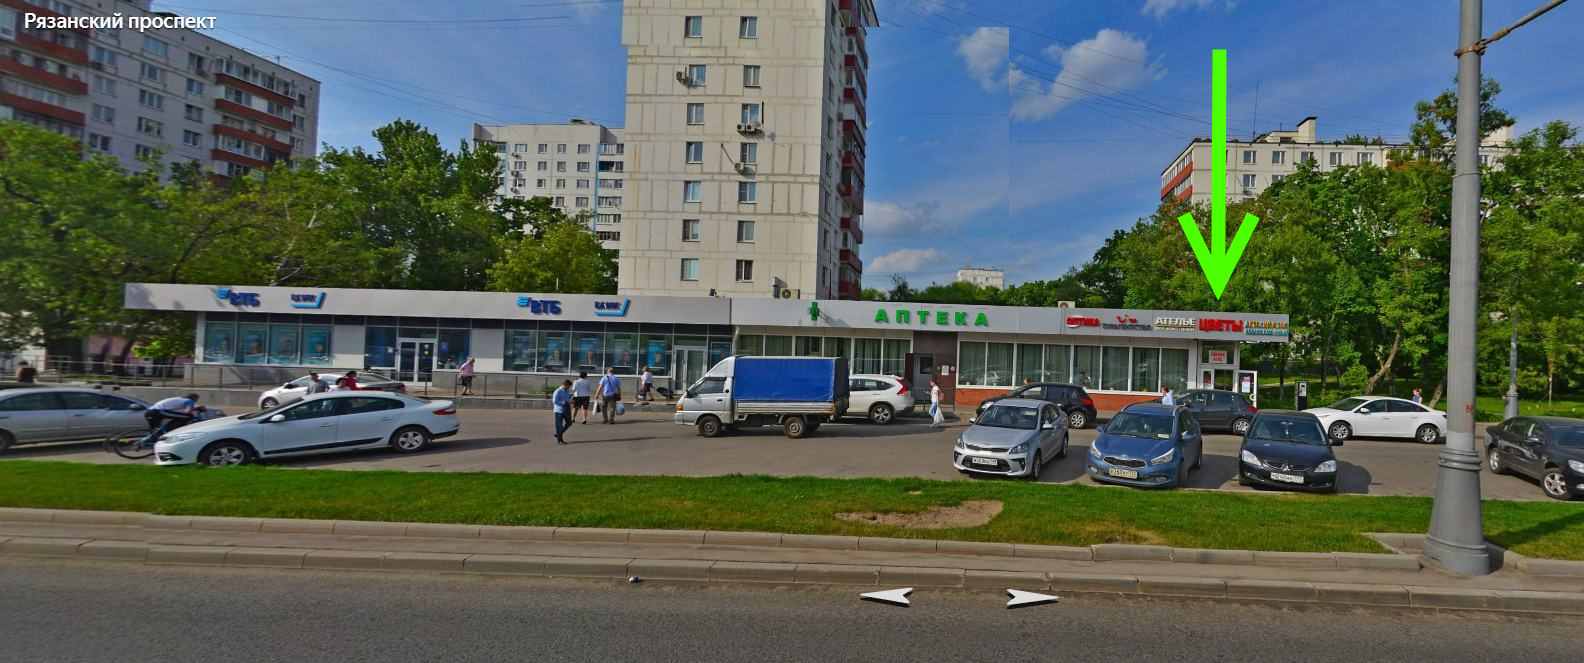 Рязанский проспект у метро москва